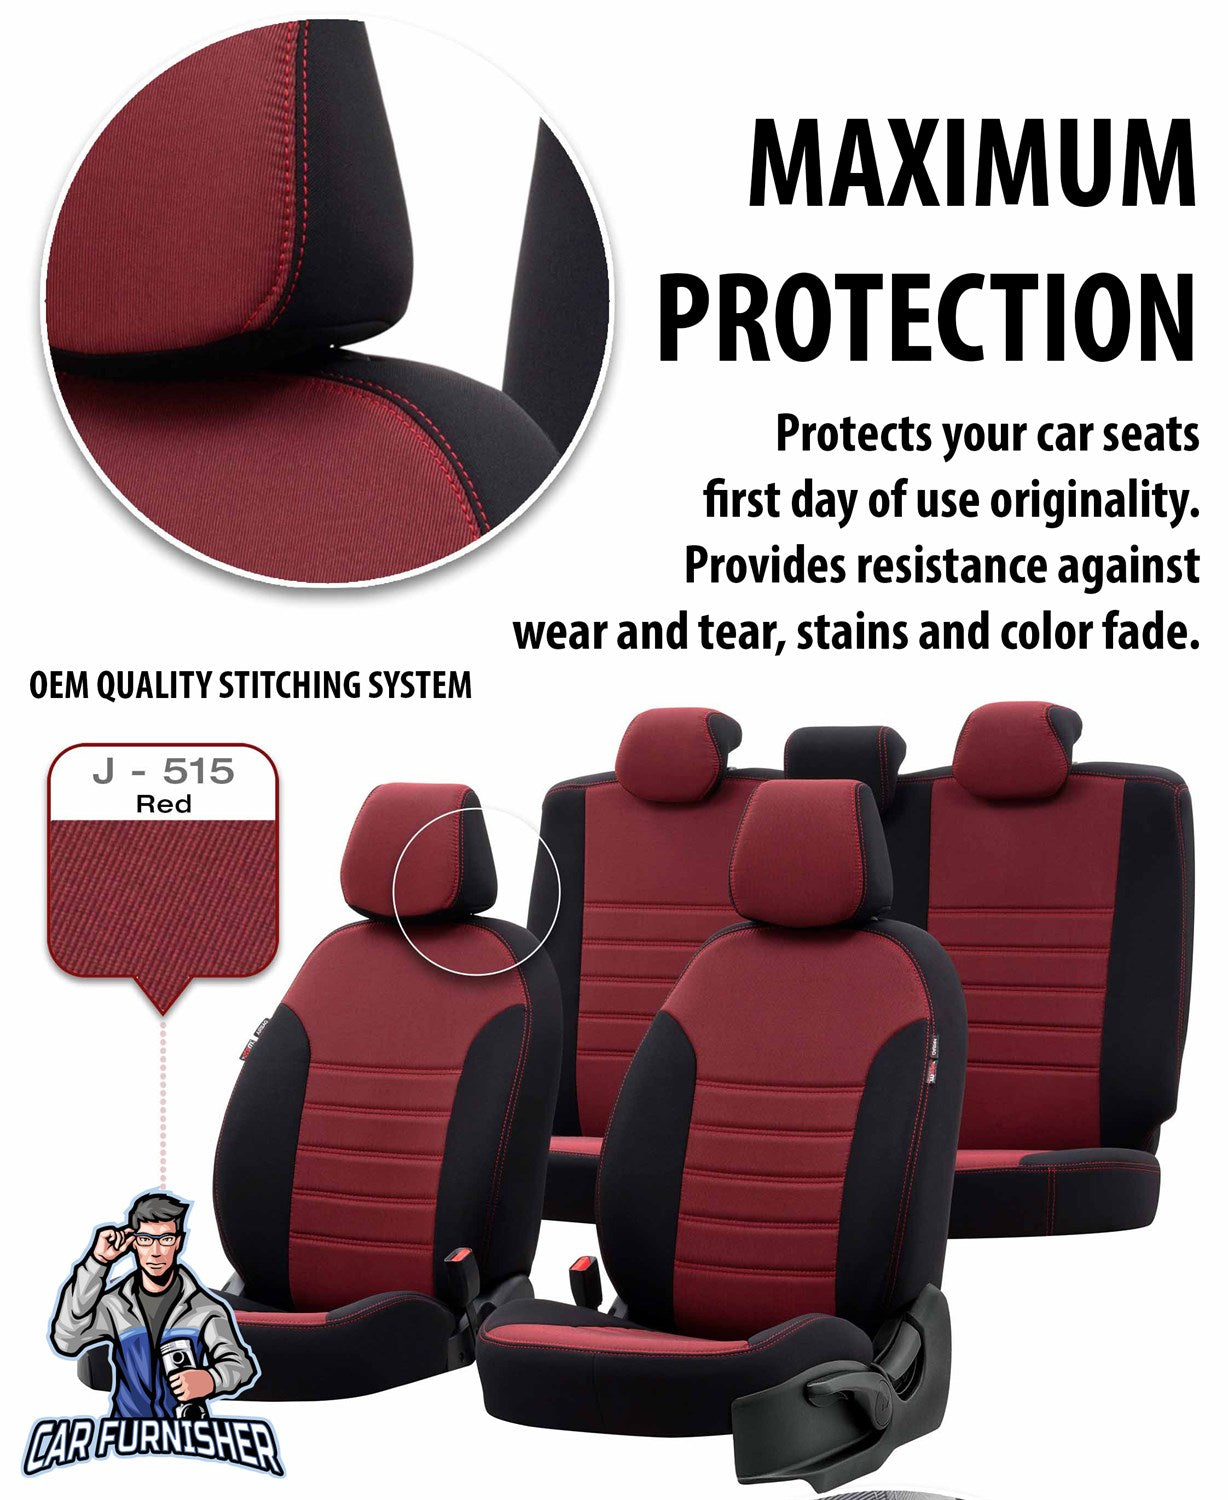 Tata Xenon Seat Covers Original Jacquard Design Black Jacquard Fabric